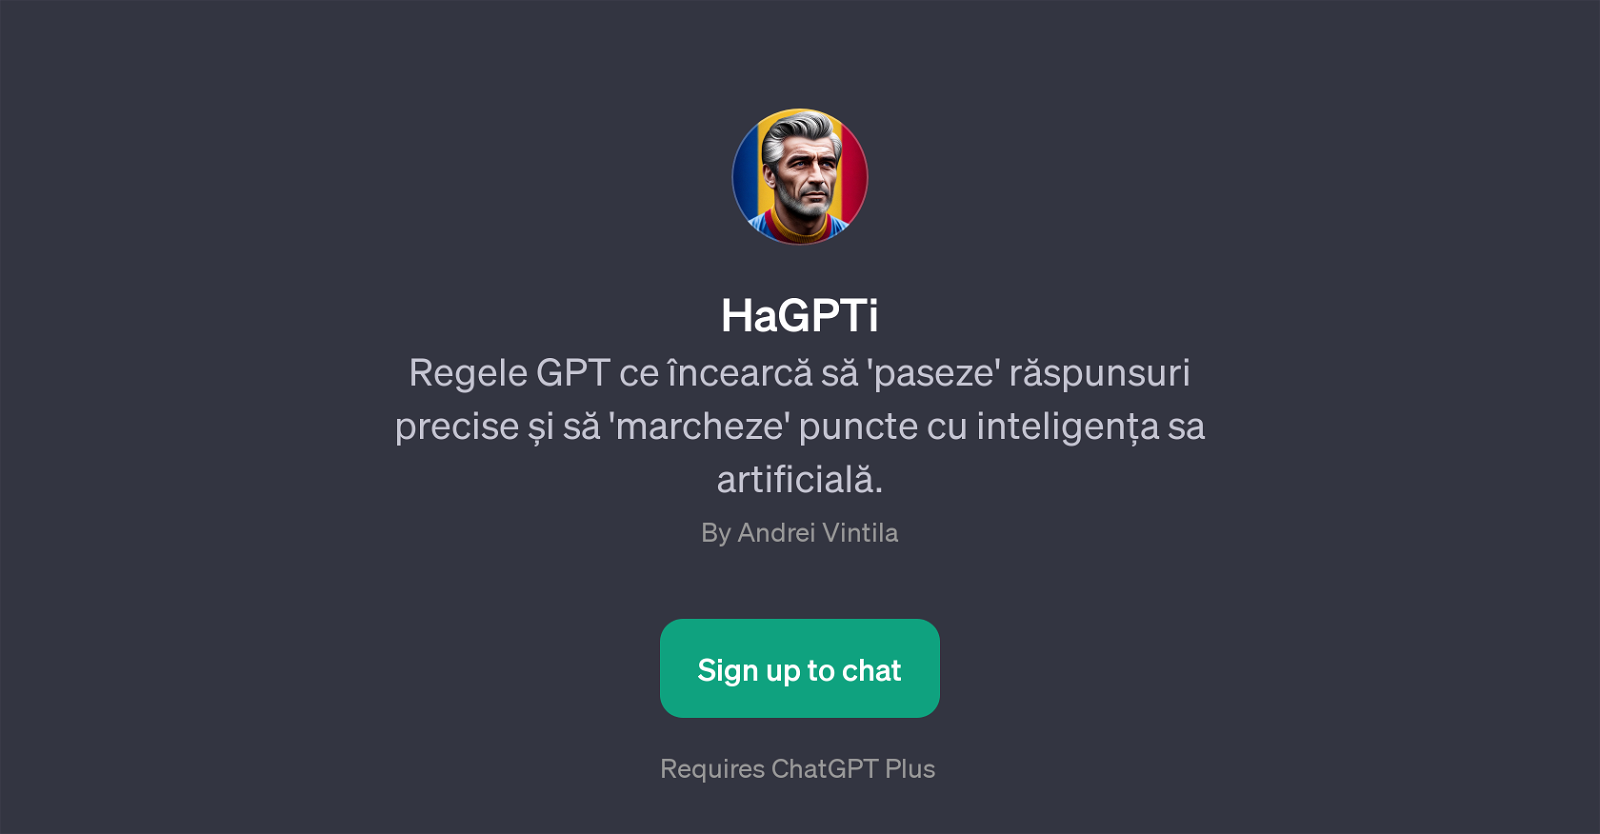 HaGPTi website